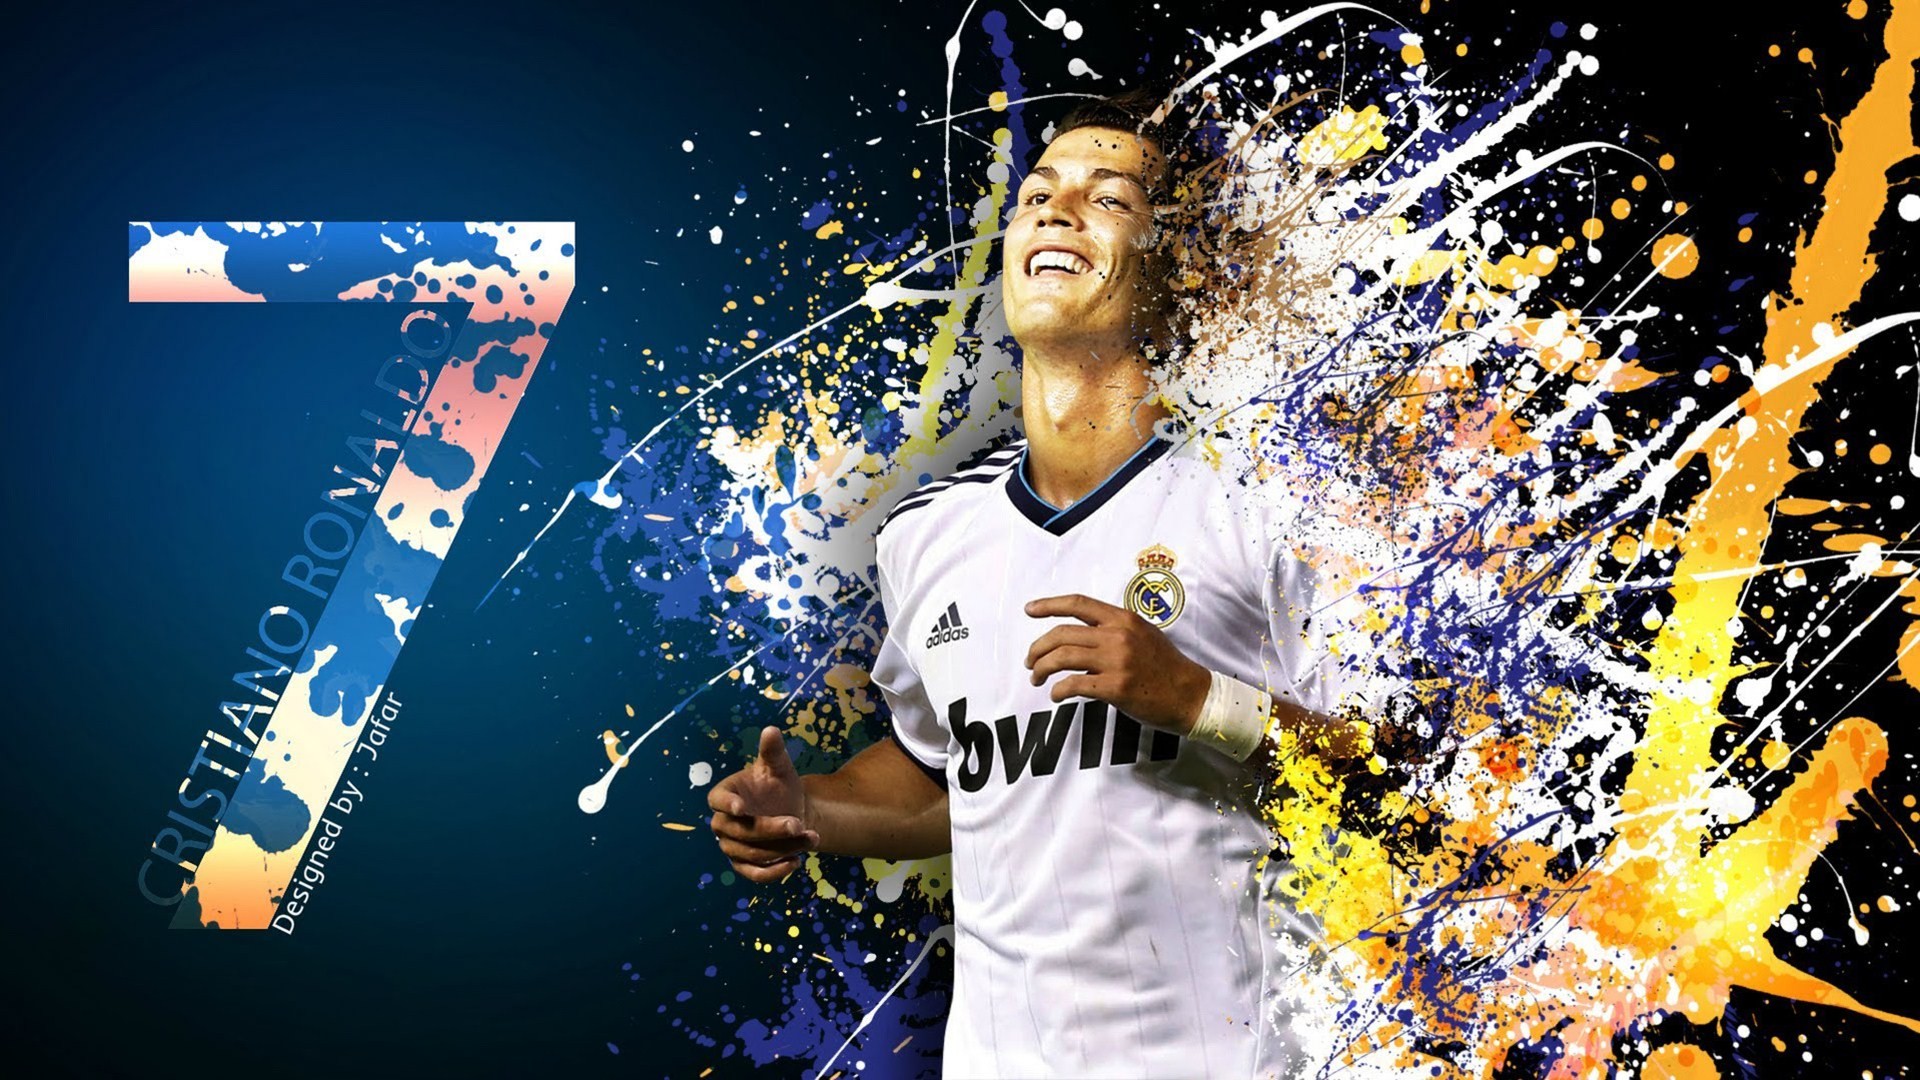 Download Soccer Ronaldo Wallpaper CR7 App Free on PC (Emulator) - LDPlayer